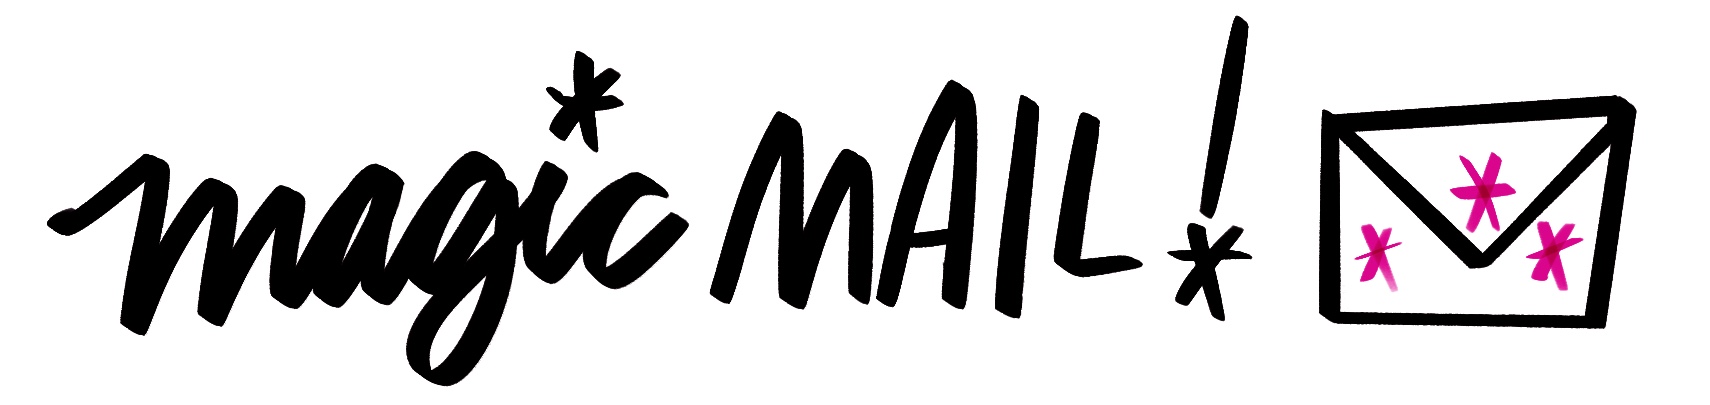 magic mail- the handwriting club